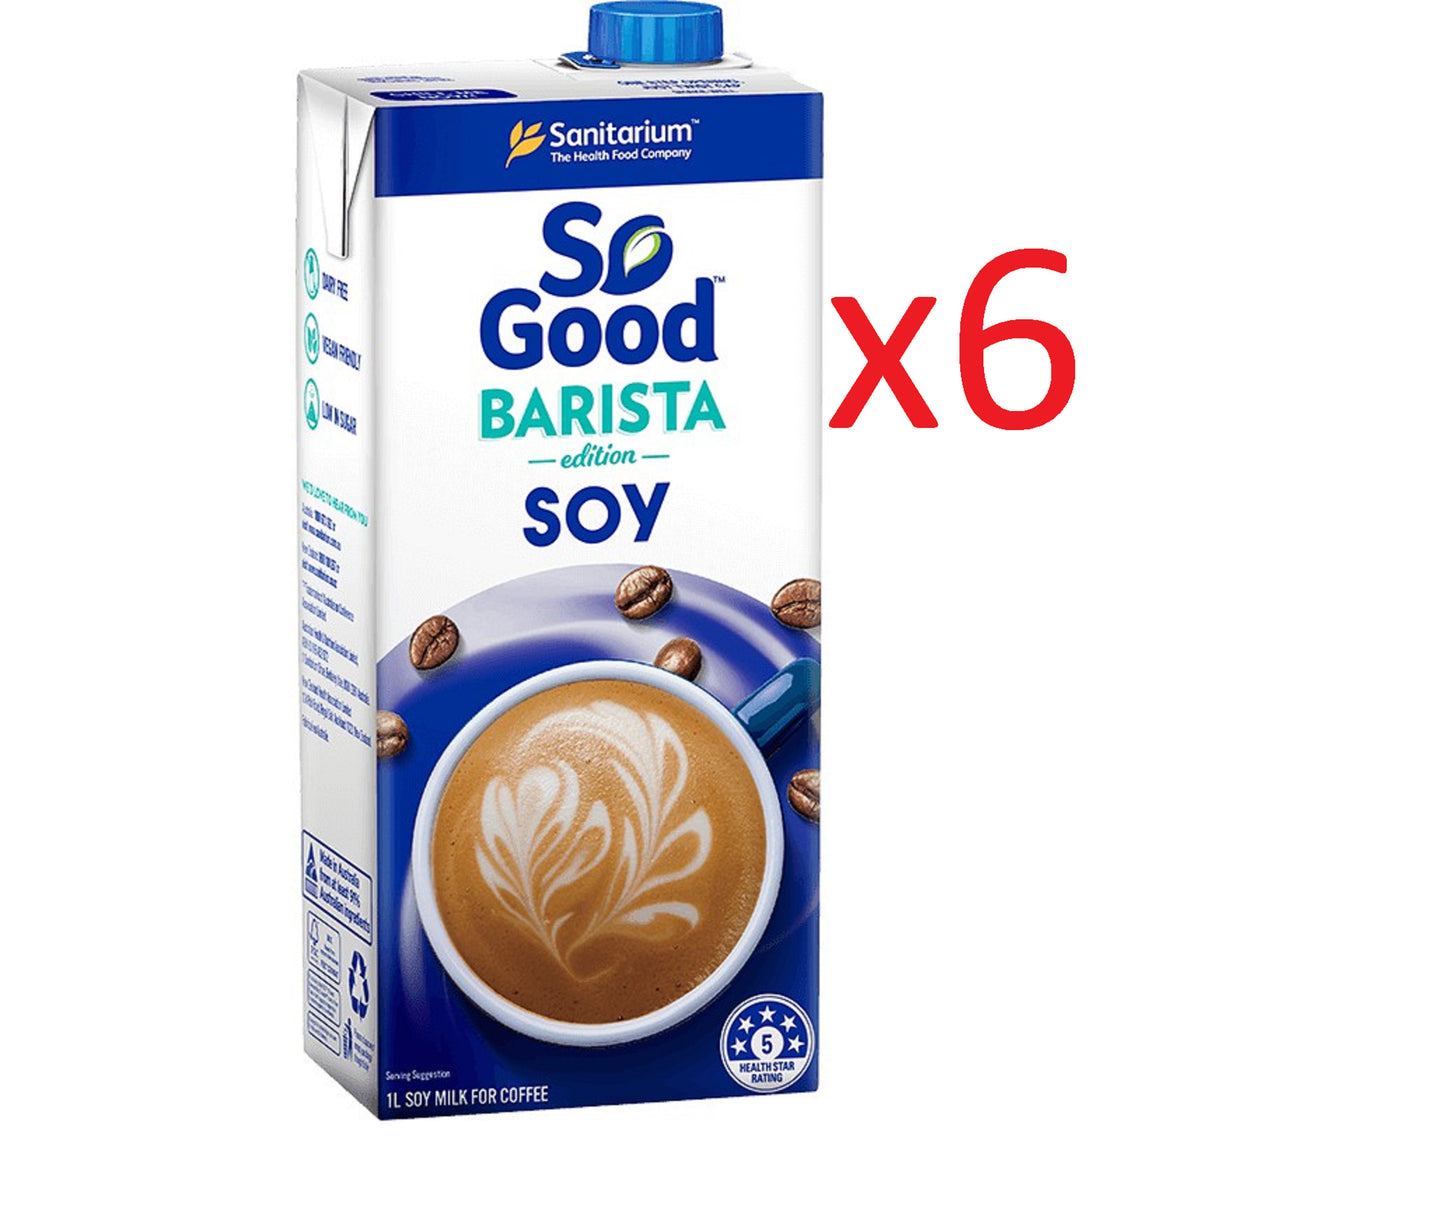 (Buy 6) So Good Barista Soy 1 liter